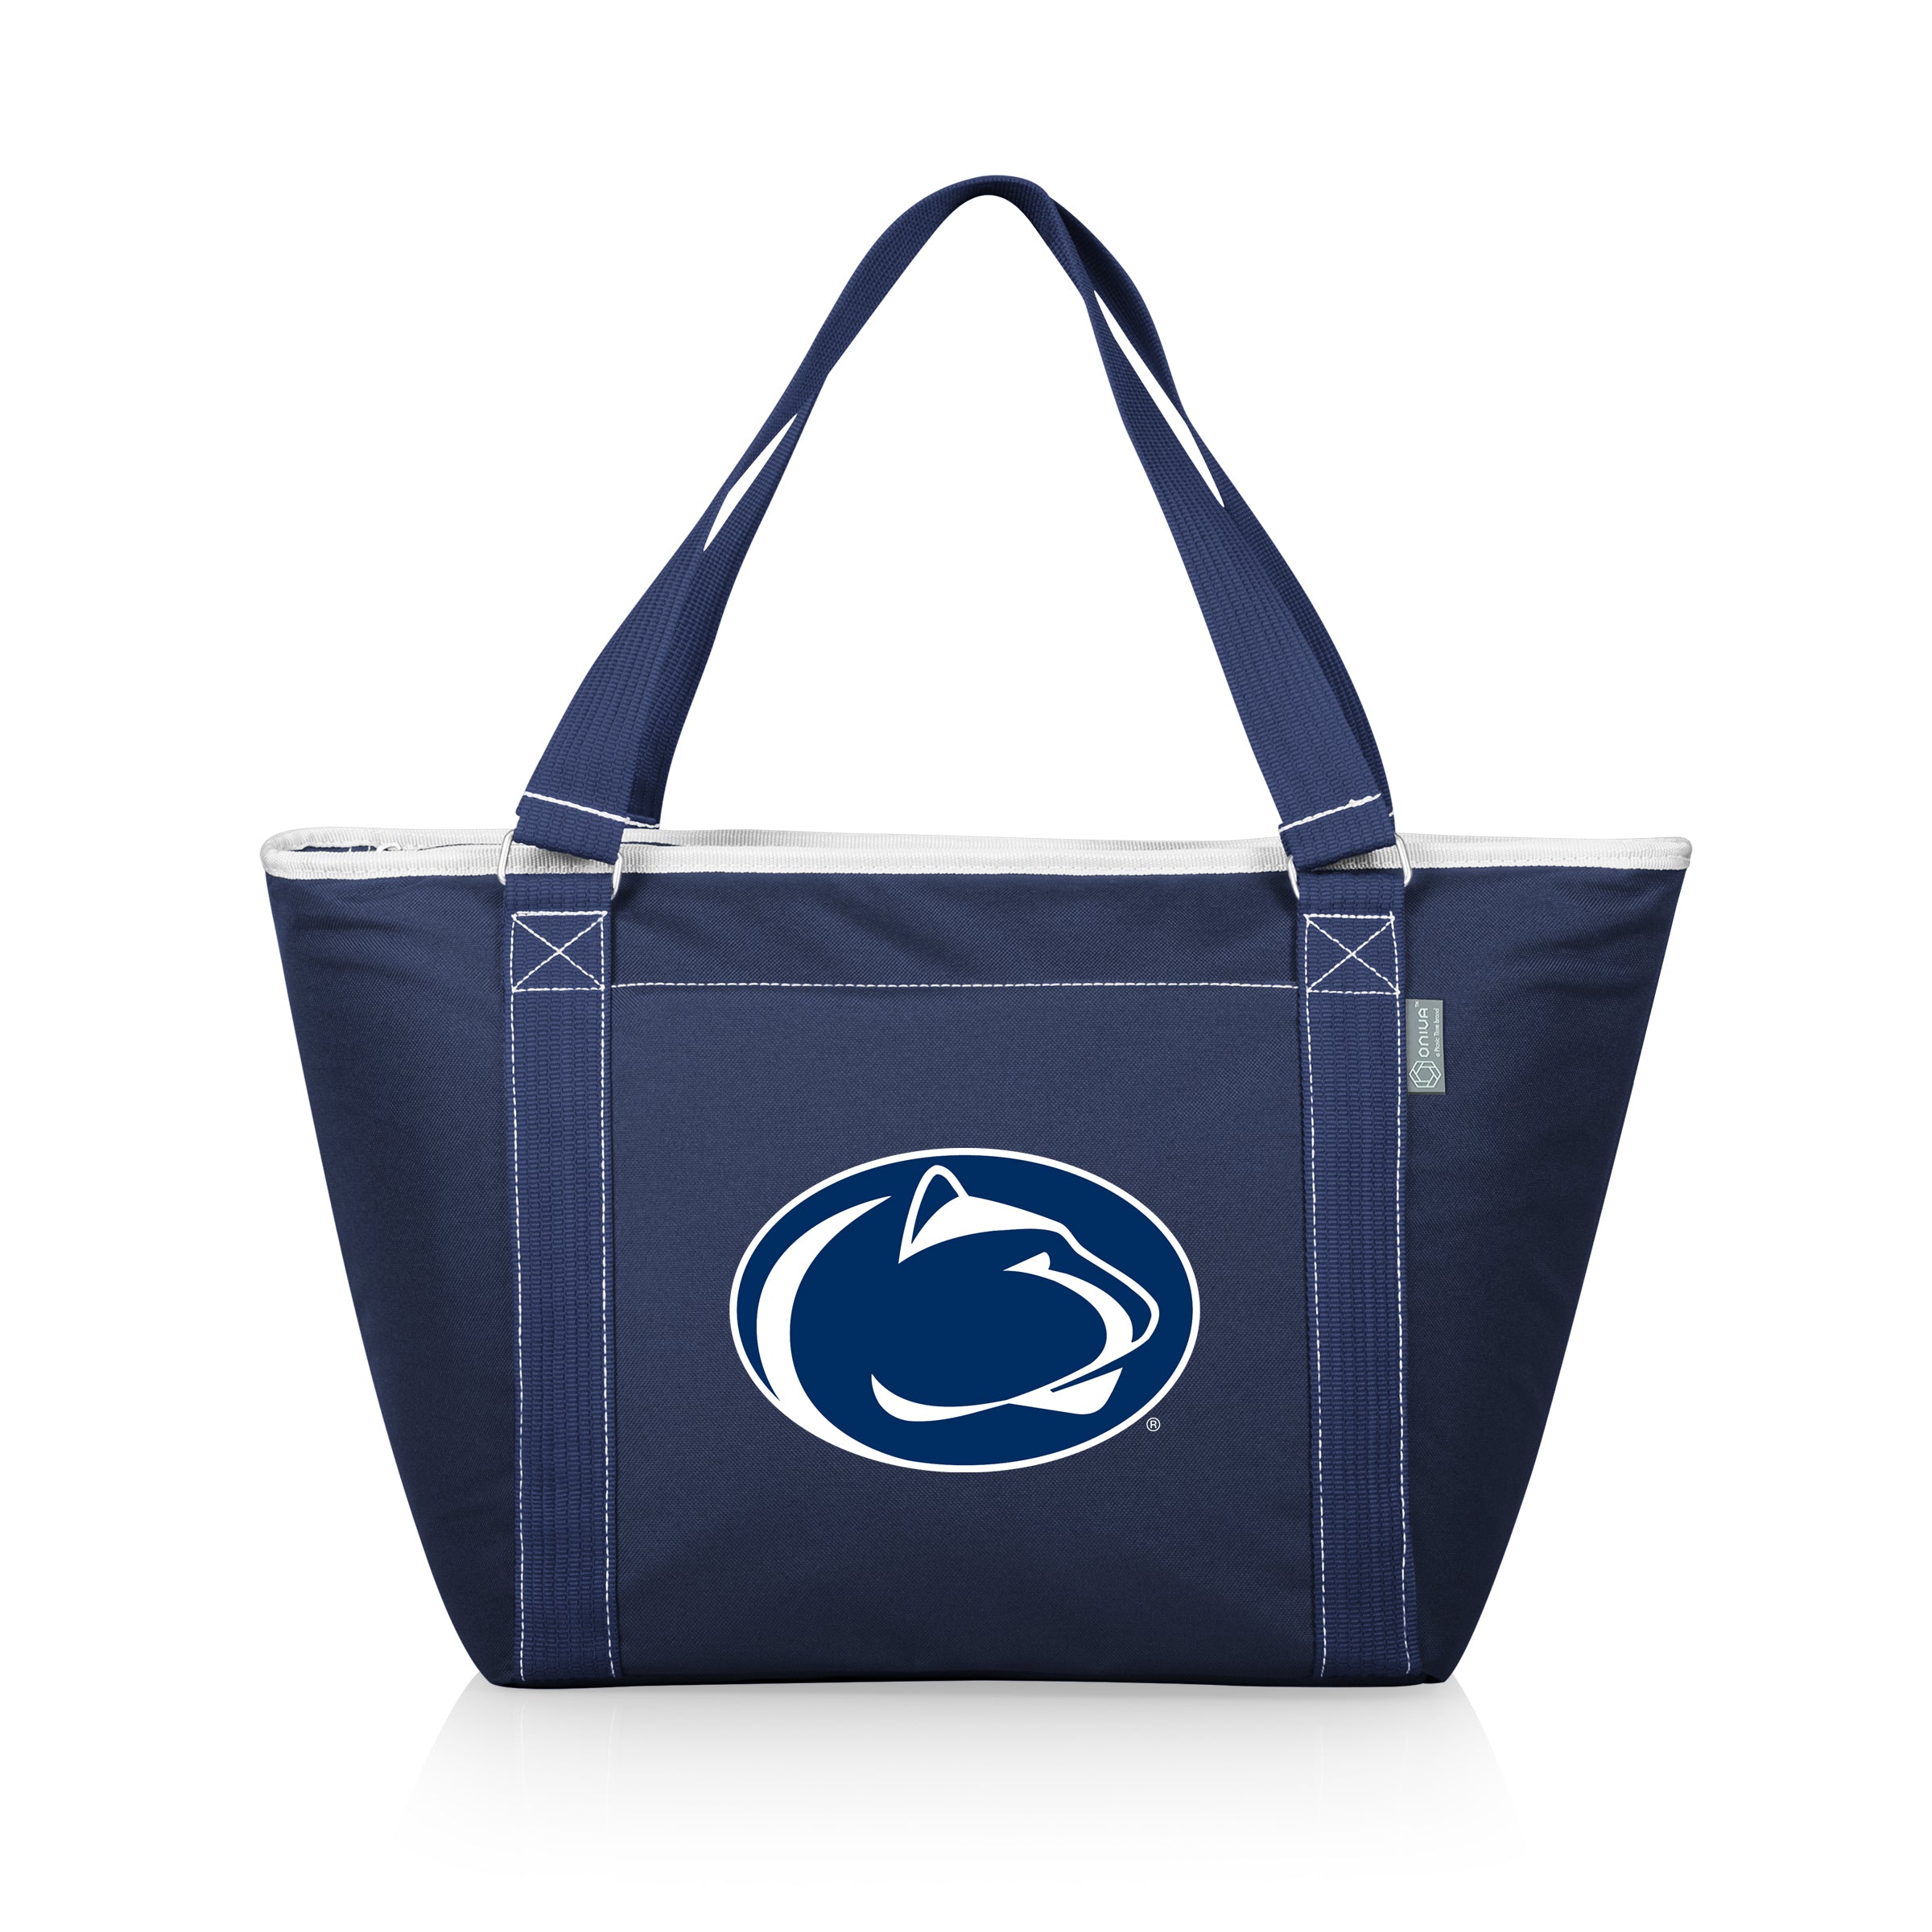 Penn State Nittany Lions - Topanga Cooler Tote Bag